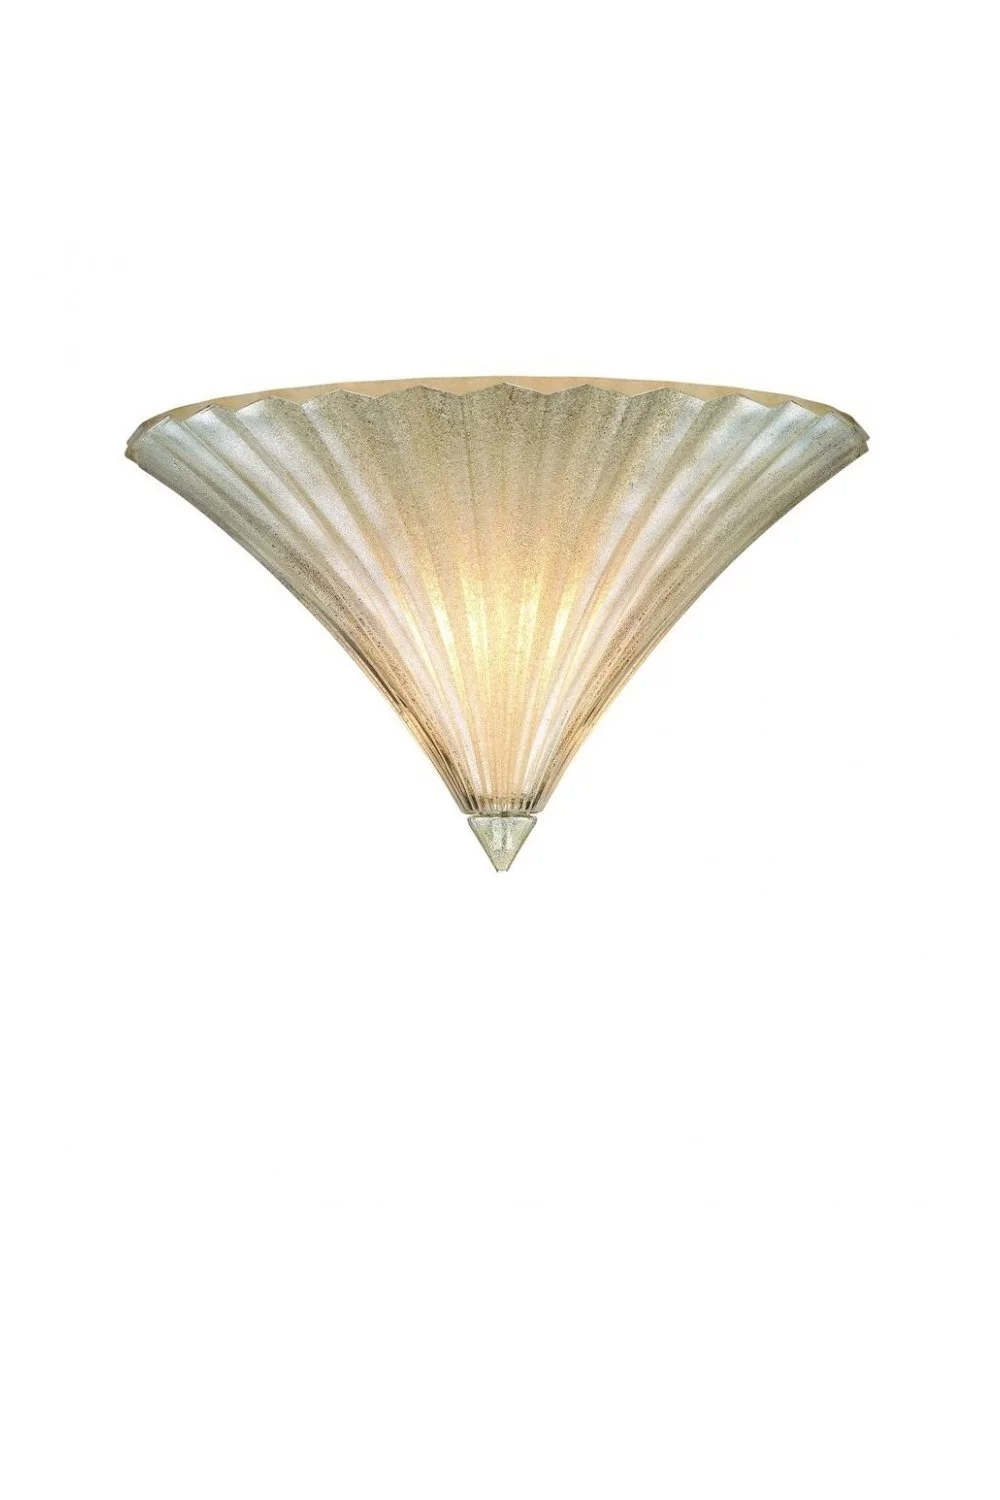   
                        
                        Бра IDEAL LUX (Италия) 67576    
                         в стиле Арт-деко.  
                        Тип источника света: светодиодная лампа, сменная.                                                 Цвета плафонов и подвесок: Прозрачный, Золото.                         Материал: Стекло.                          фото 1